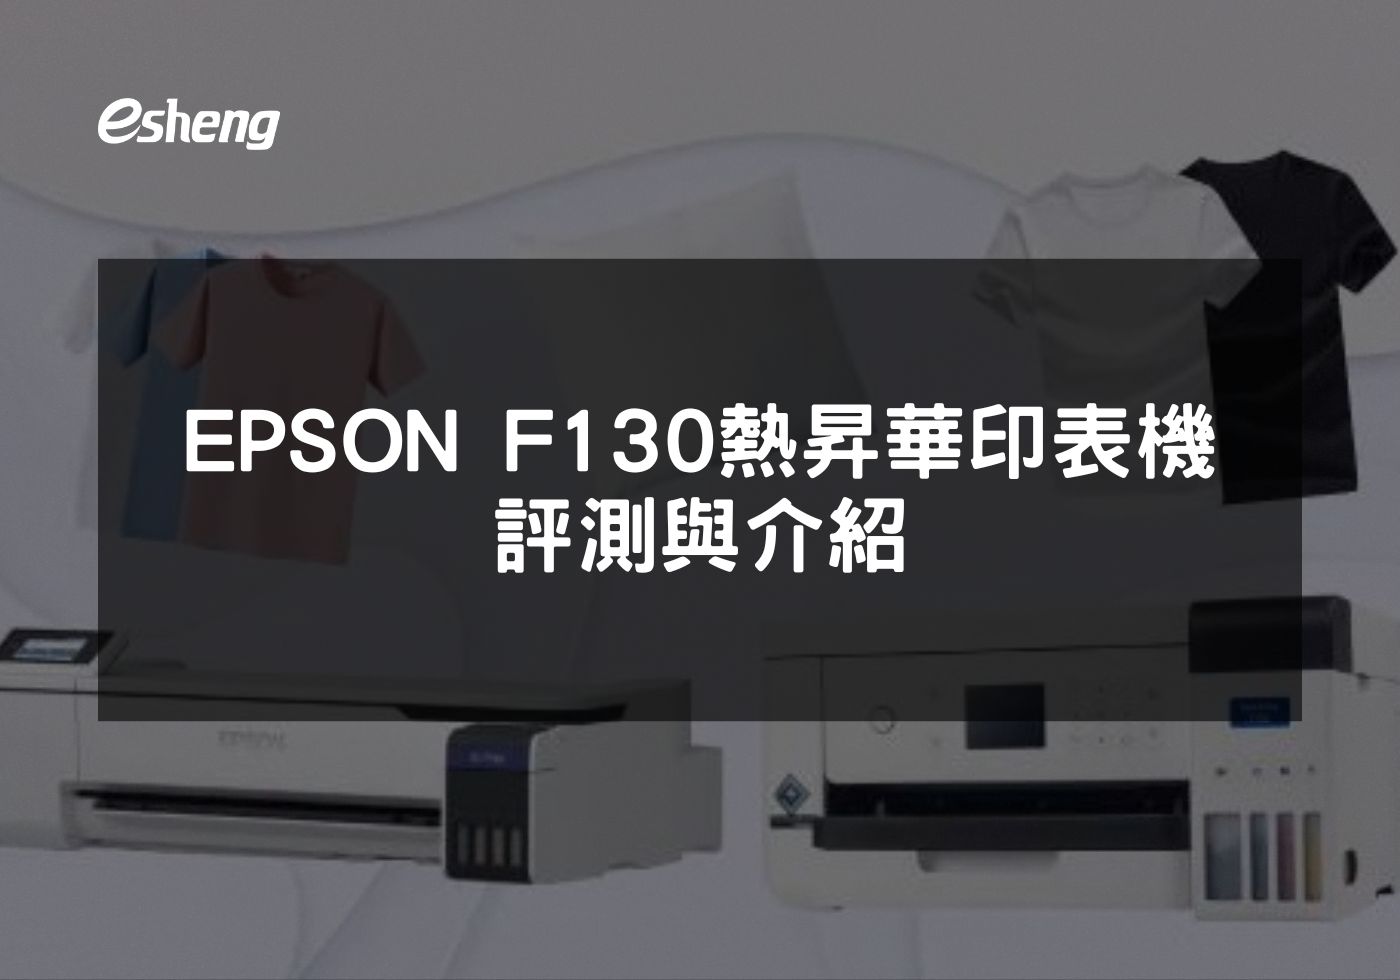 EPSON F130熱昇華印表機專為創意工作者打造